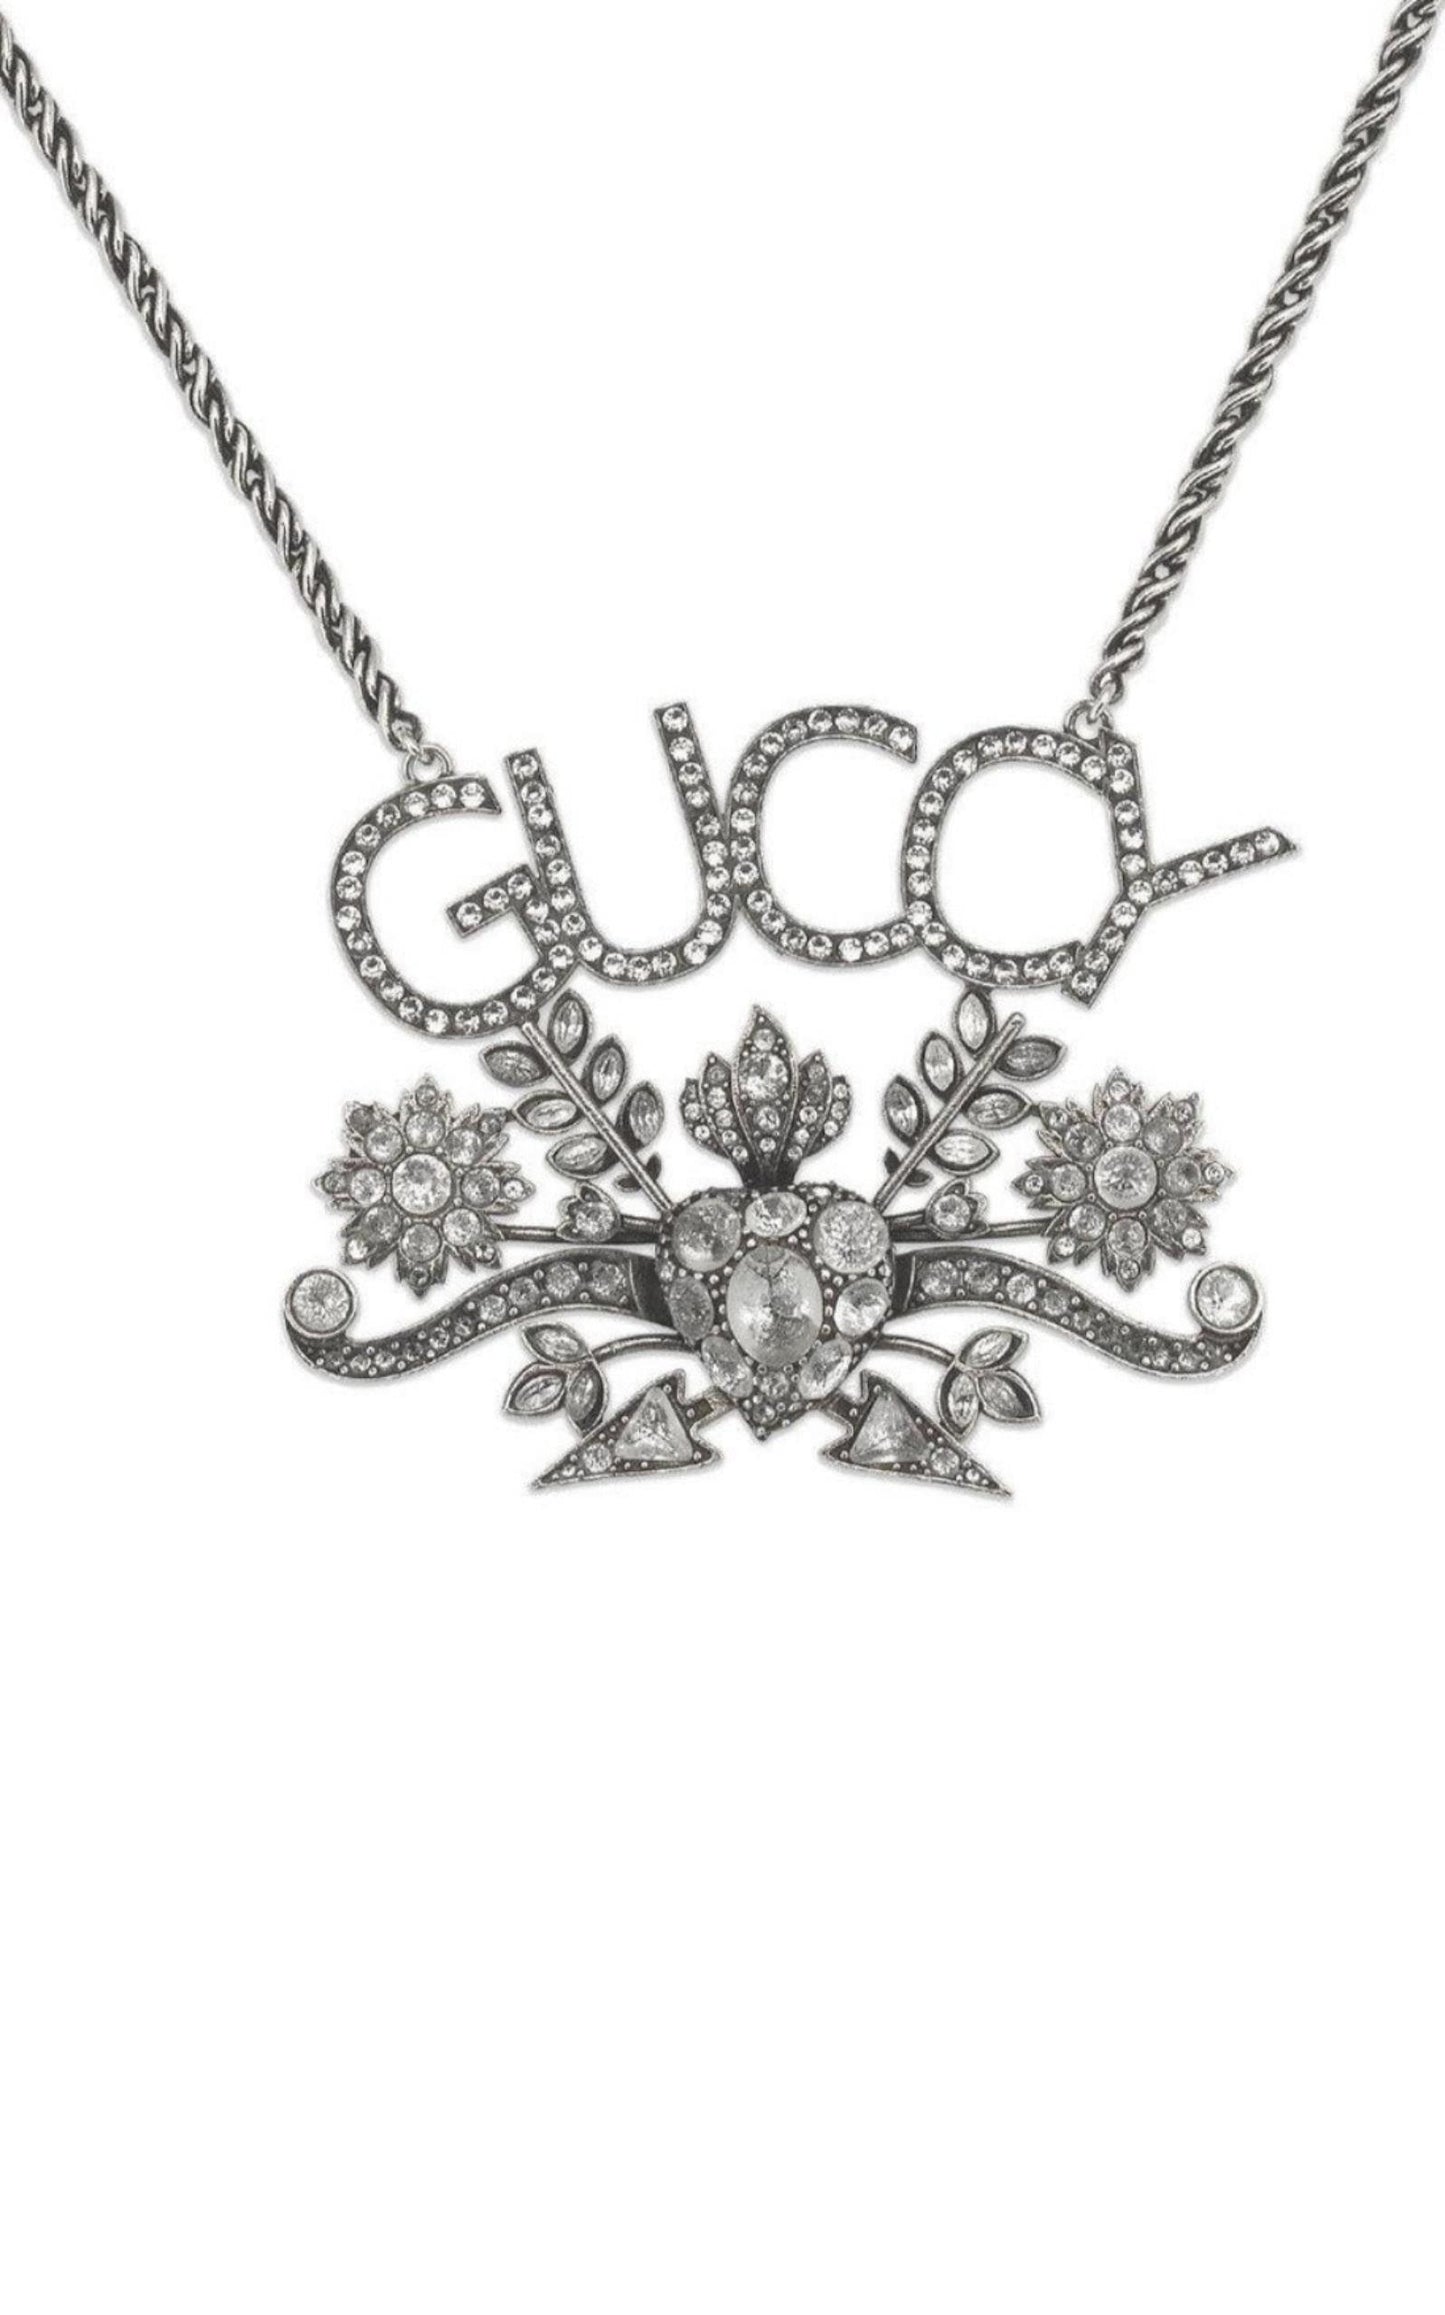  GucciGUCCY Crystal Necklace - Runway Catalog